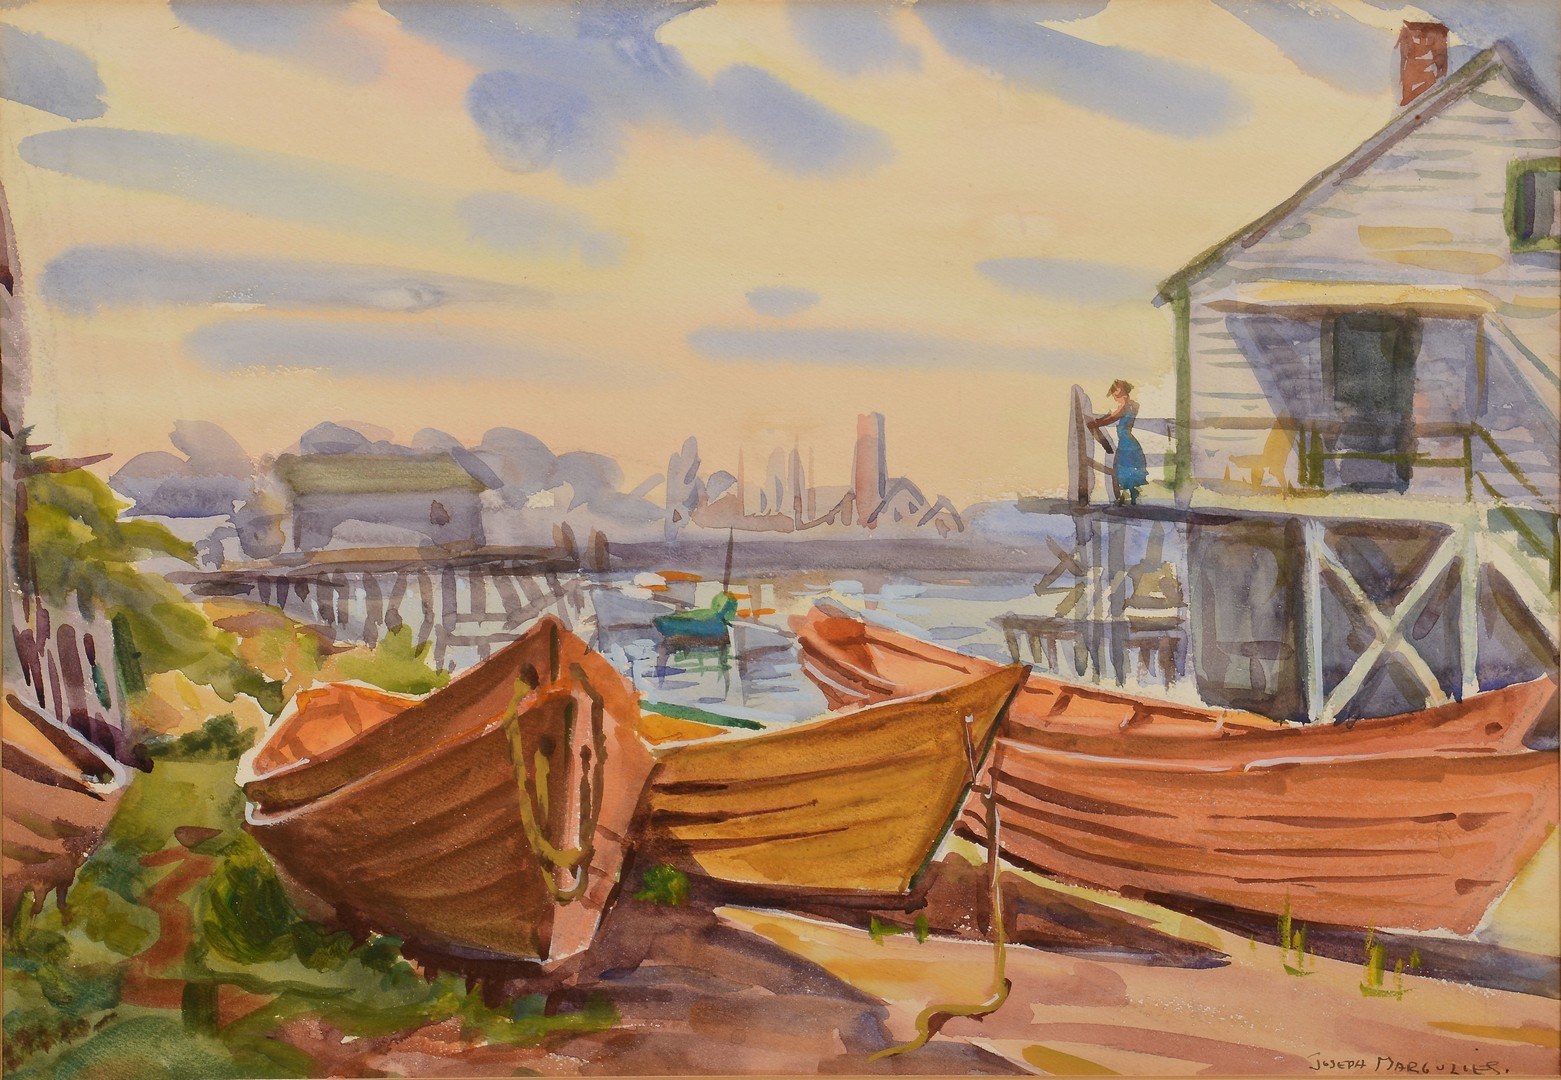 Lot 773: 2 Harbor Scene paintings